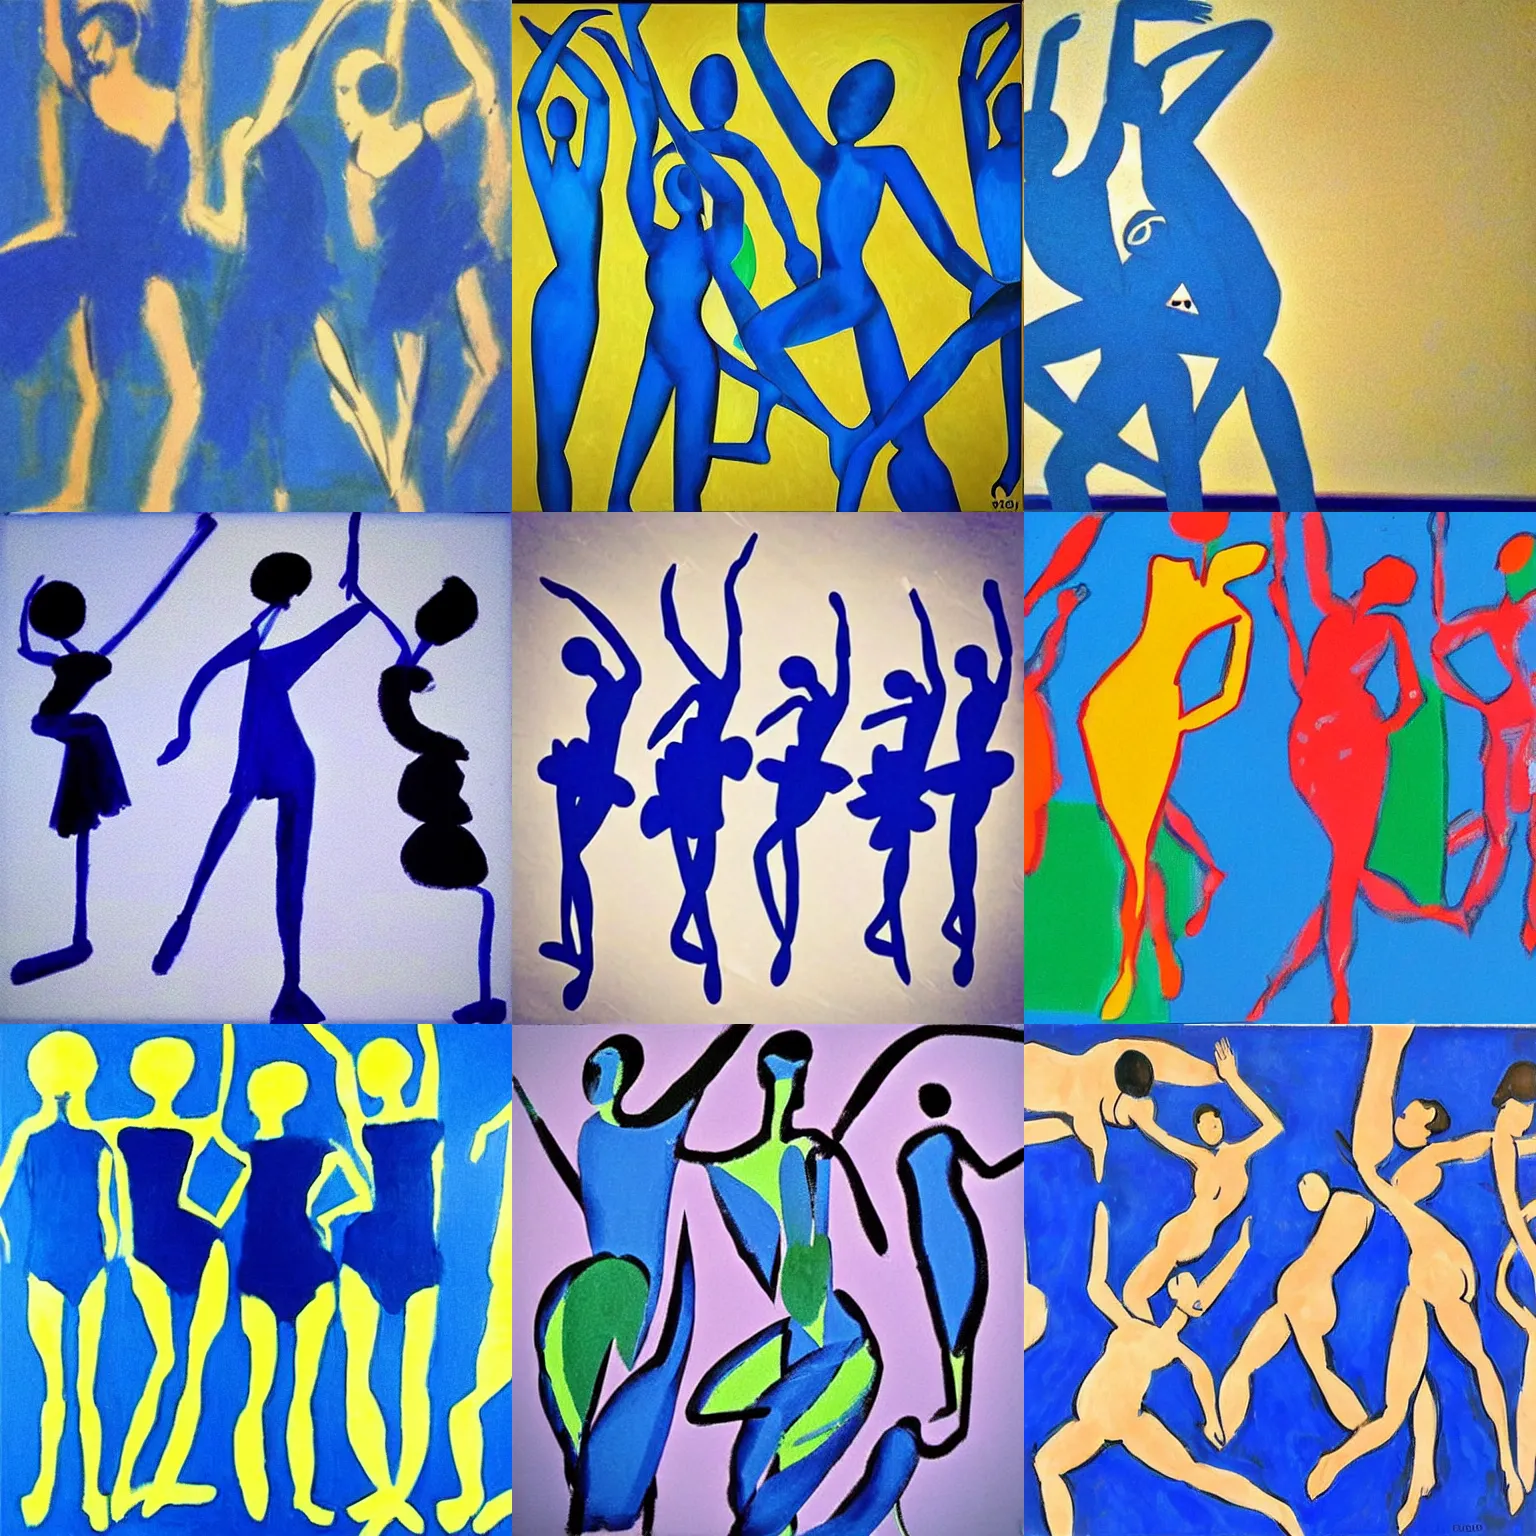 Prompt: “modern art of matisse dancers blue”